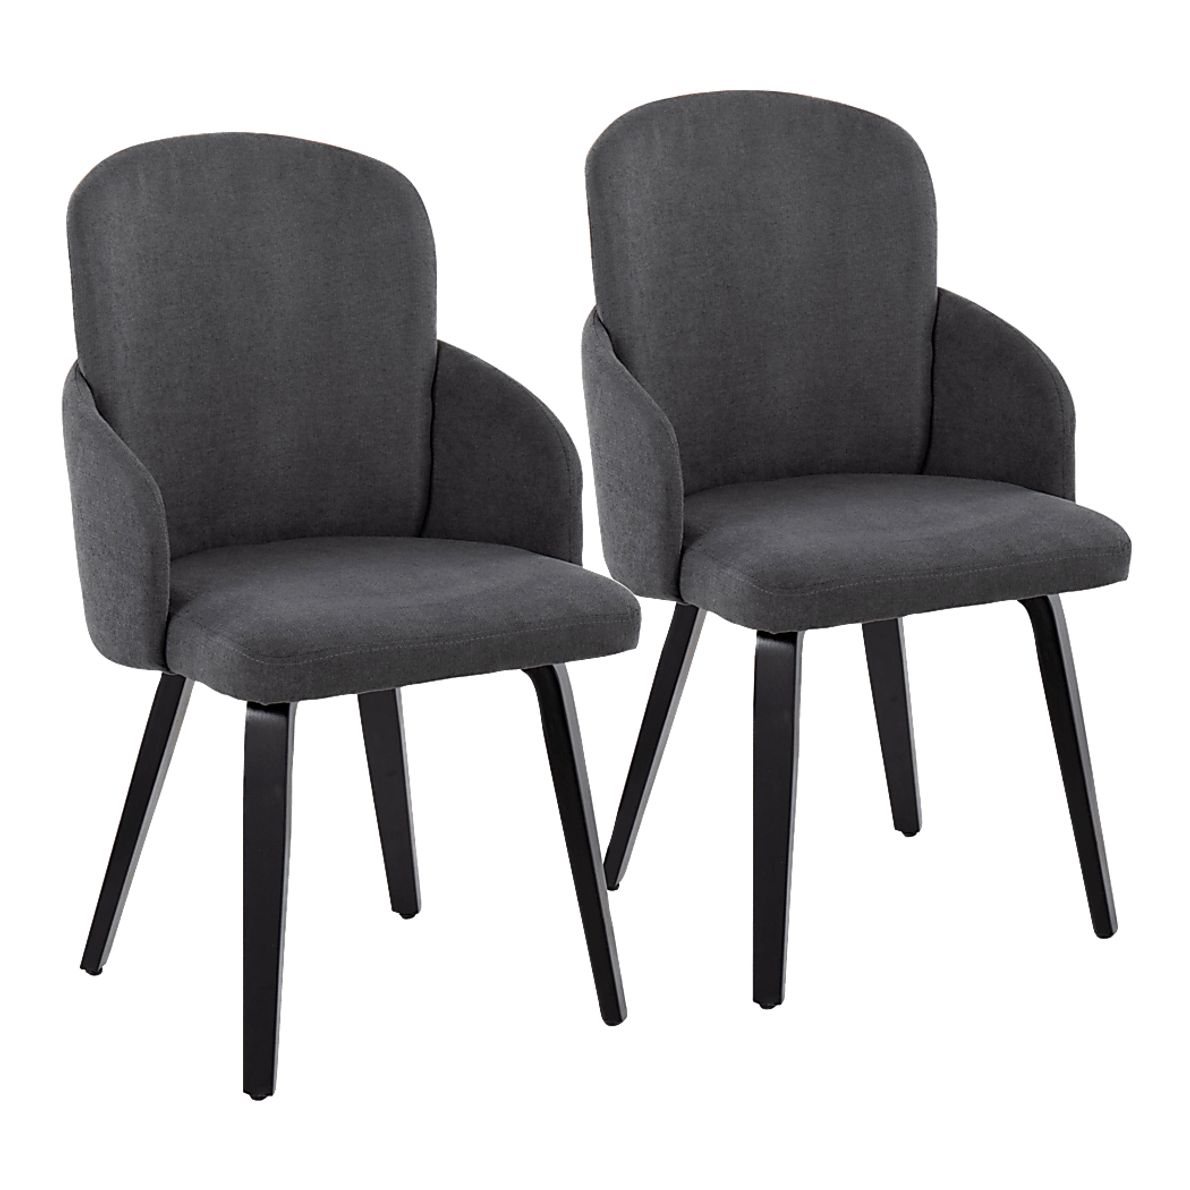 Maglista IV Dark Gray Dining Chair Set of 2